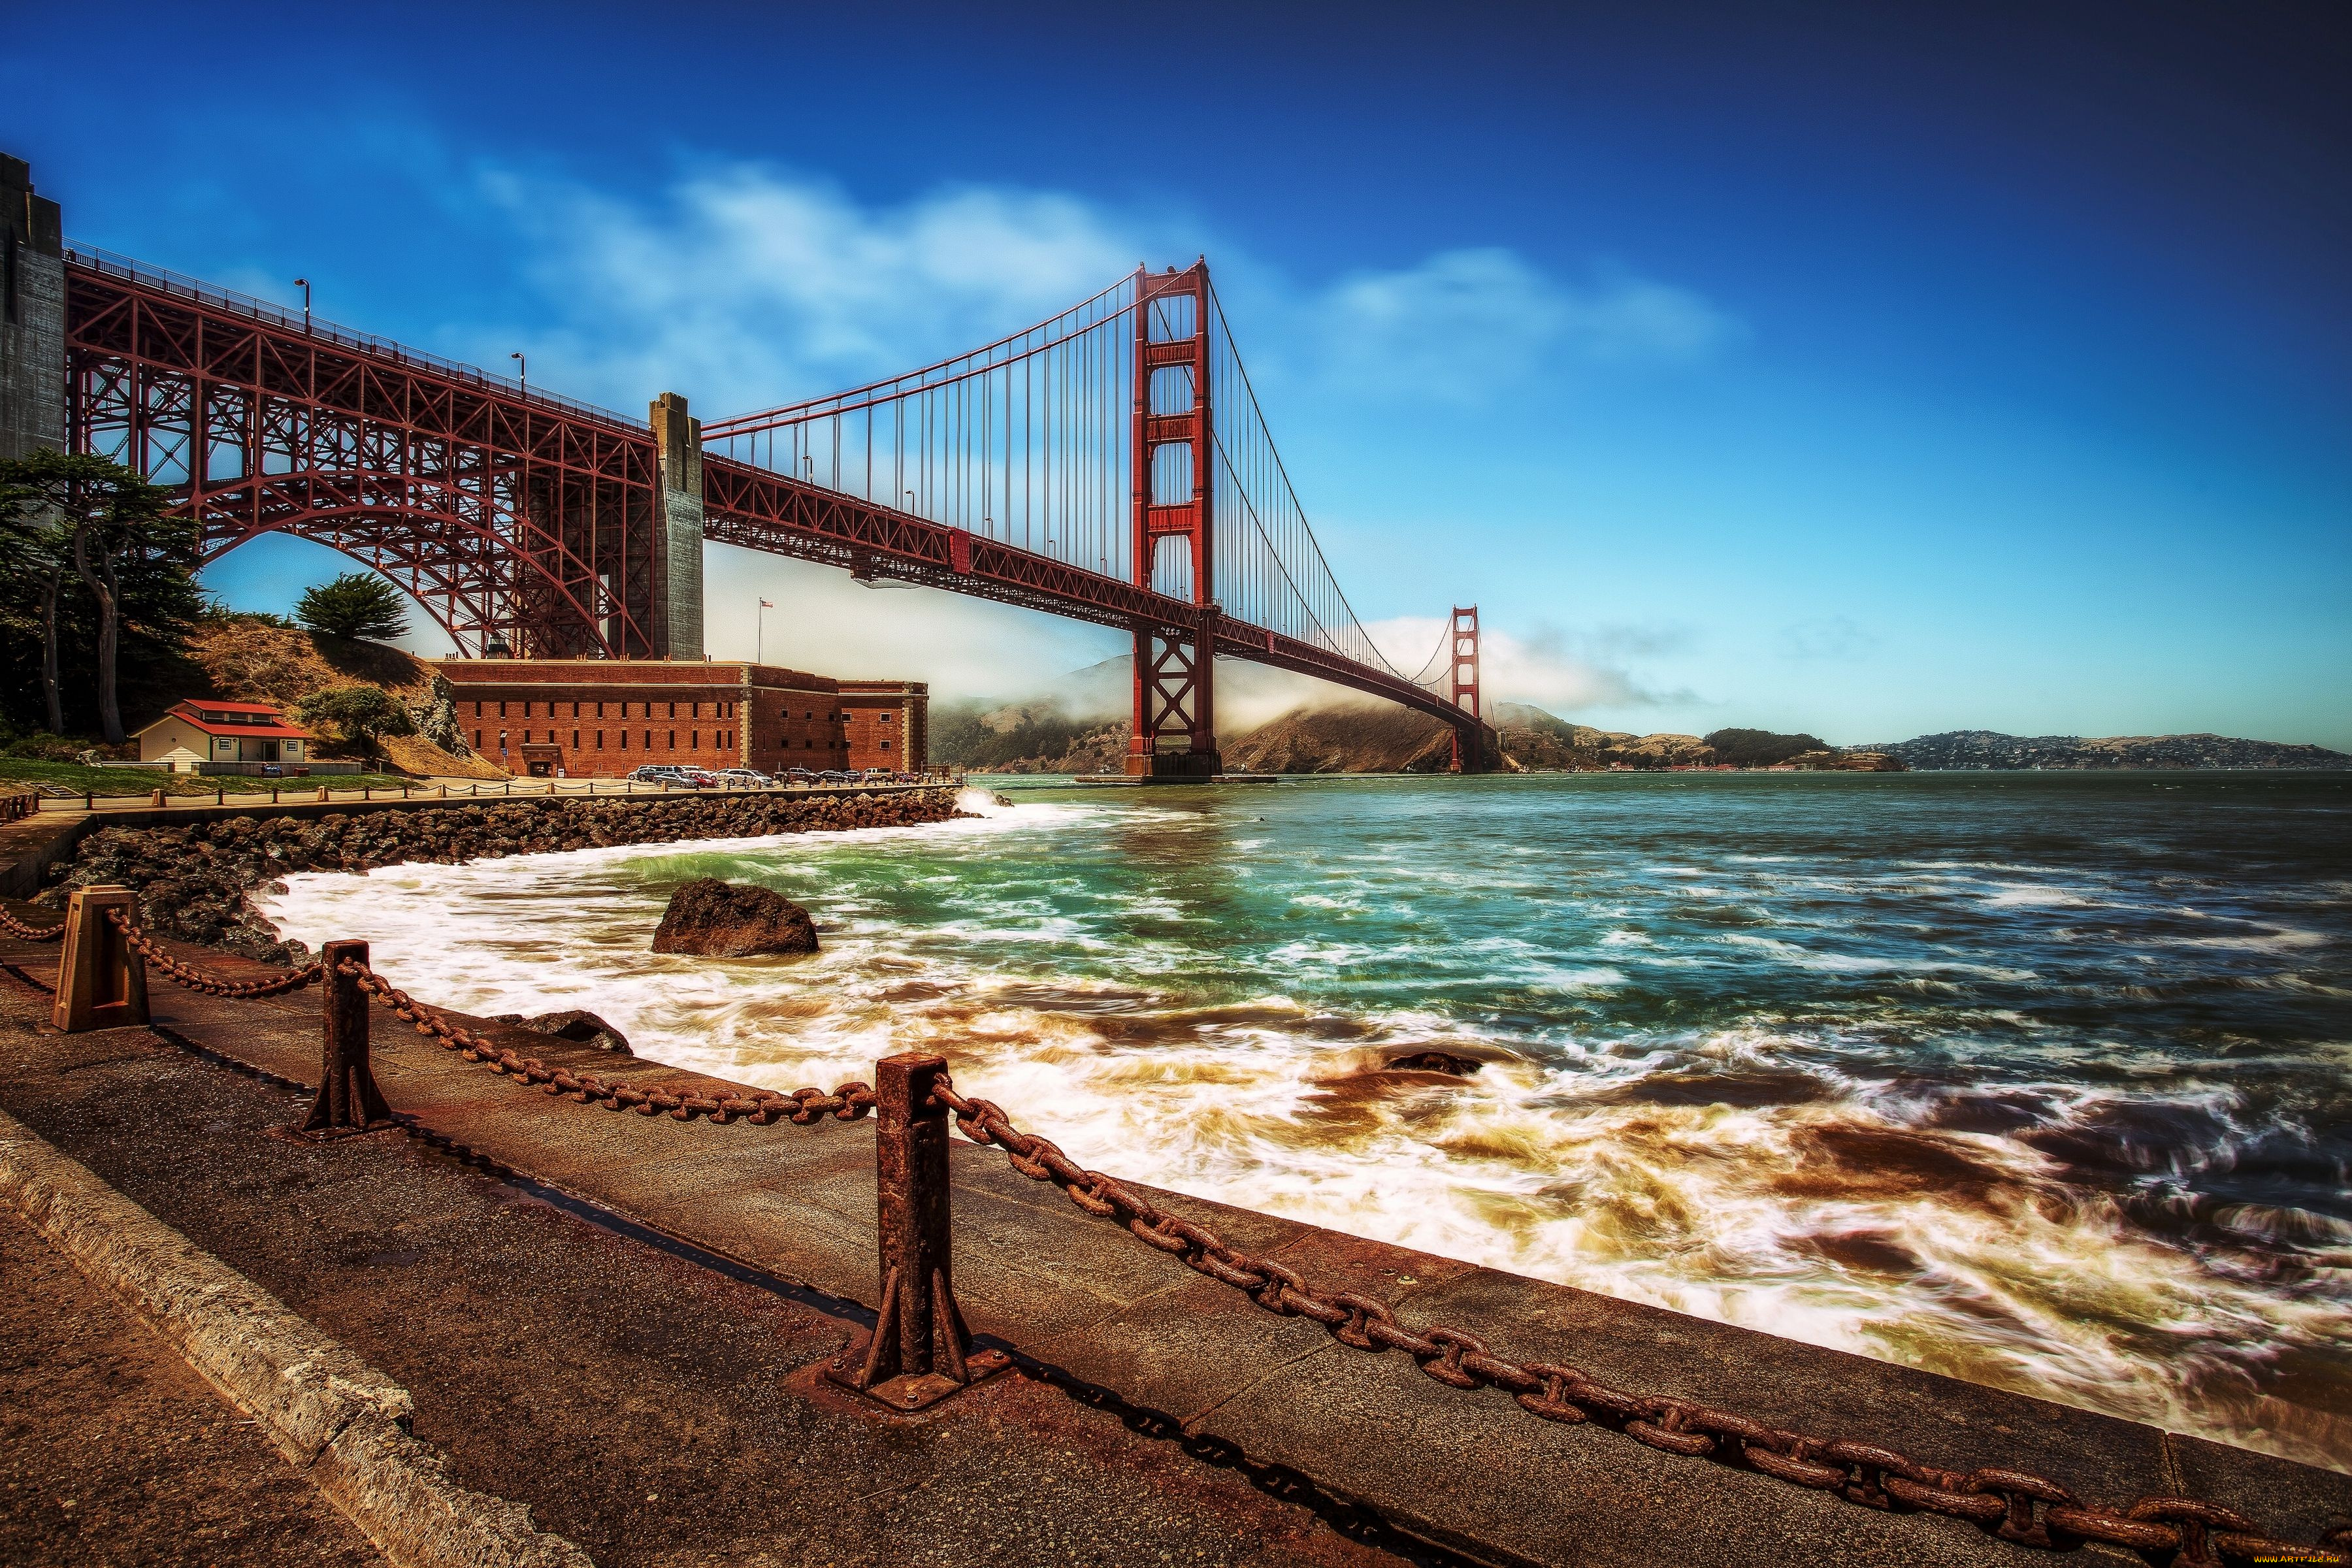 Обои разрешение 1920. Мост золотые ворота (г. Сан-Франциско). Бруклинский мост Сан Франциско. Голден гейт бридж Сан Франциско набережная.